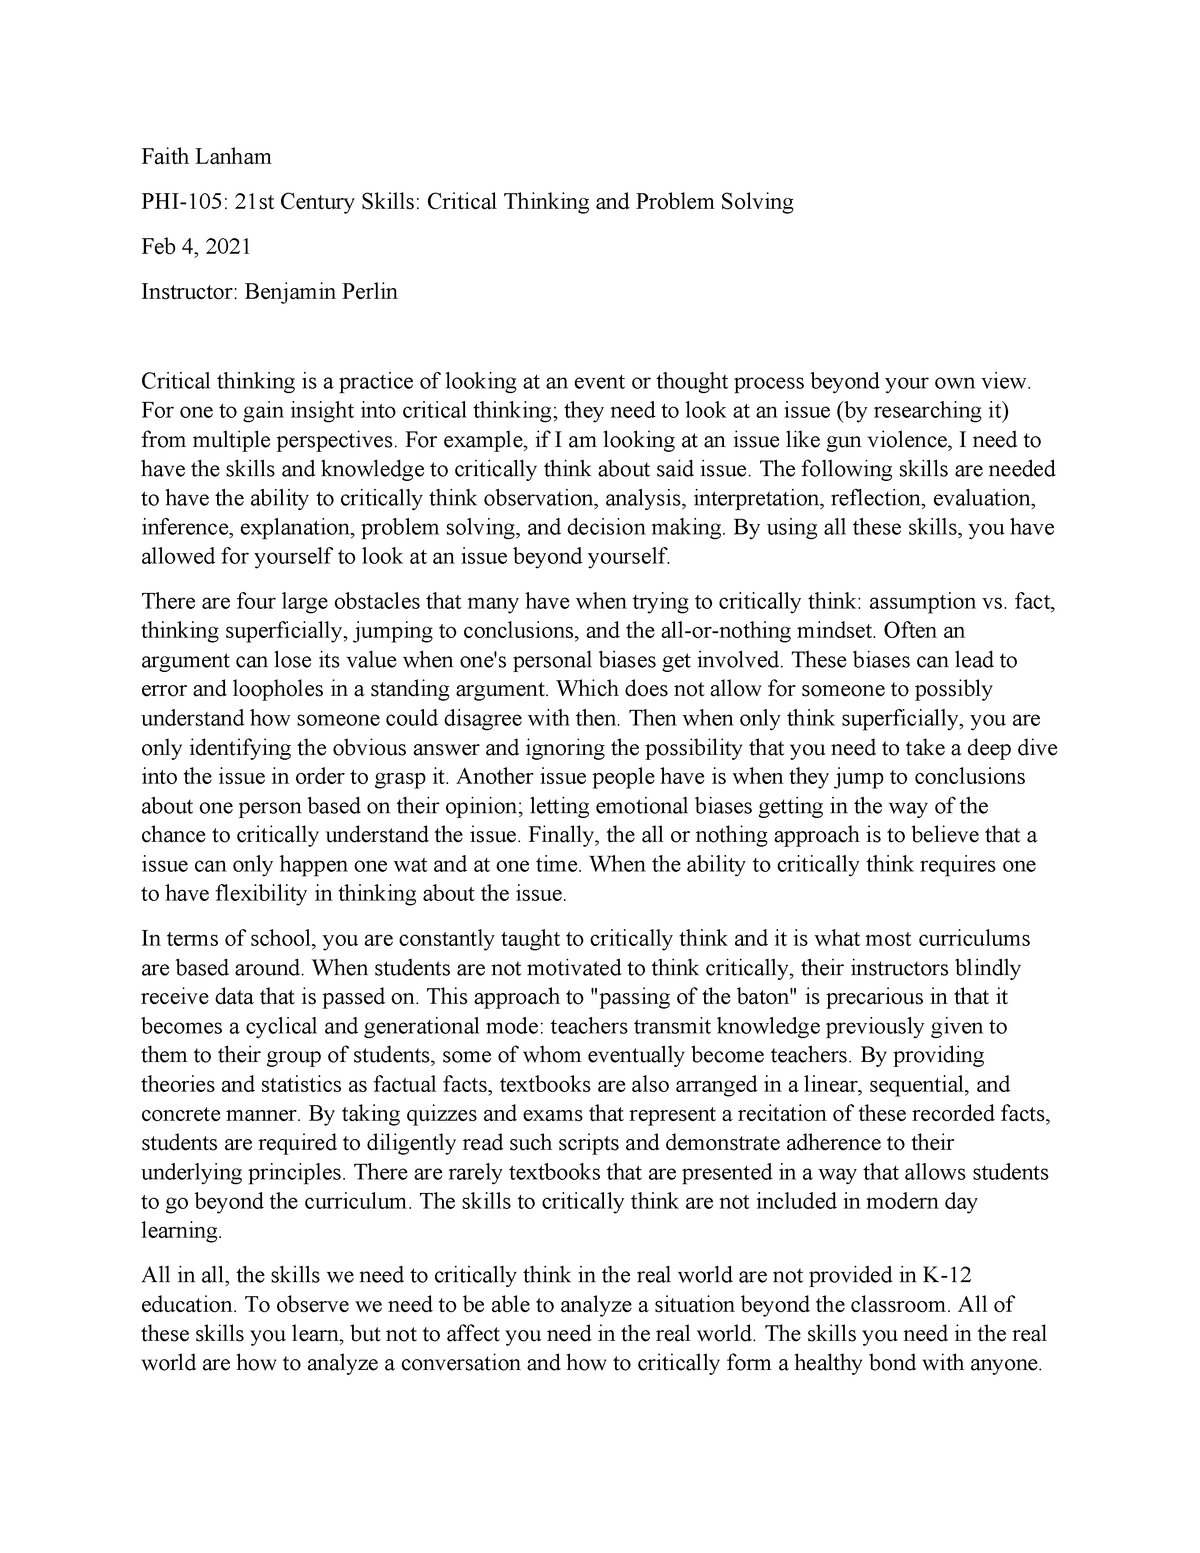 critical thinking reflection essay phi 105